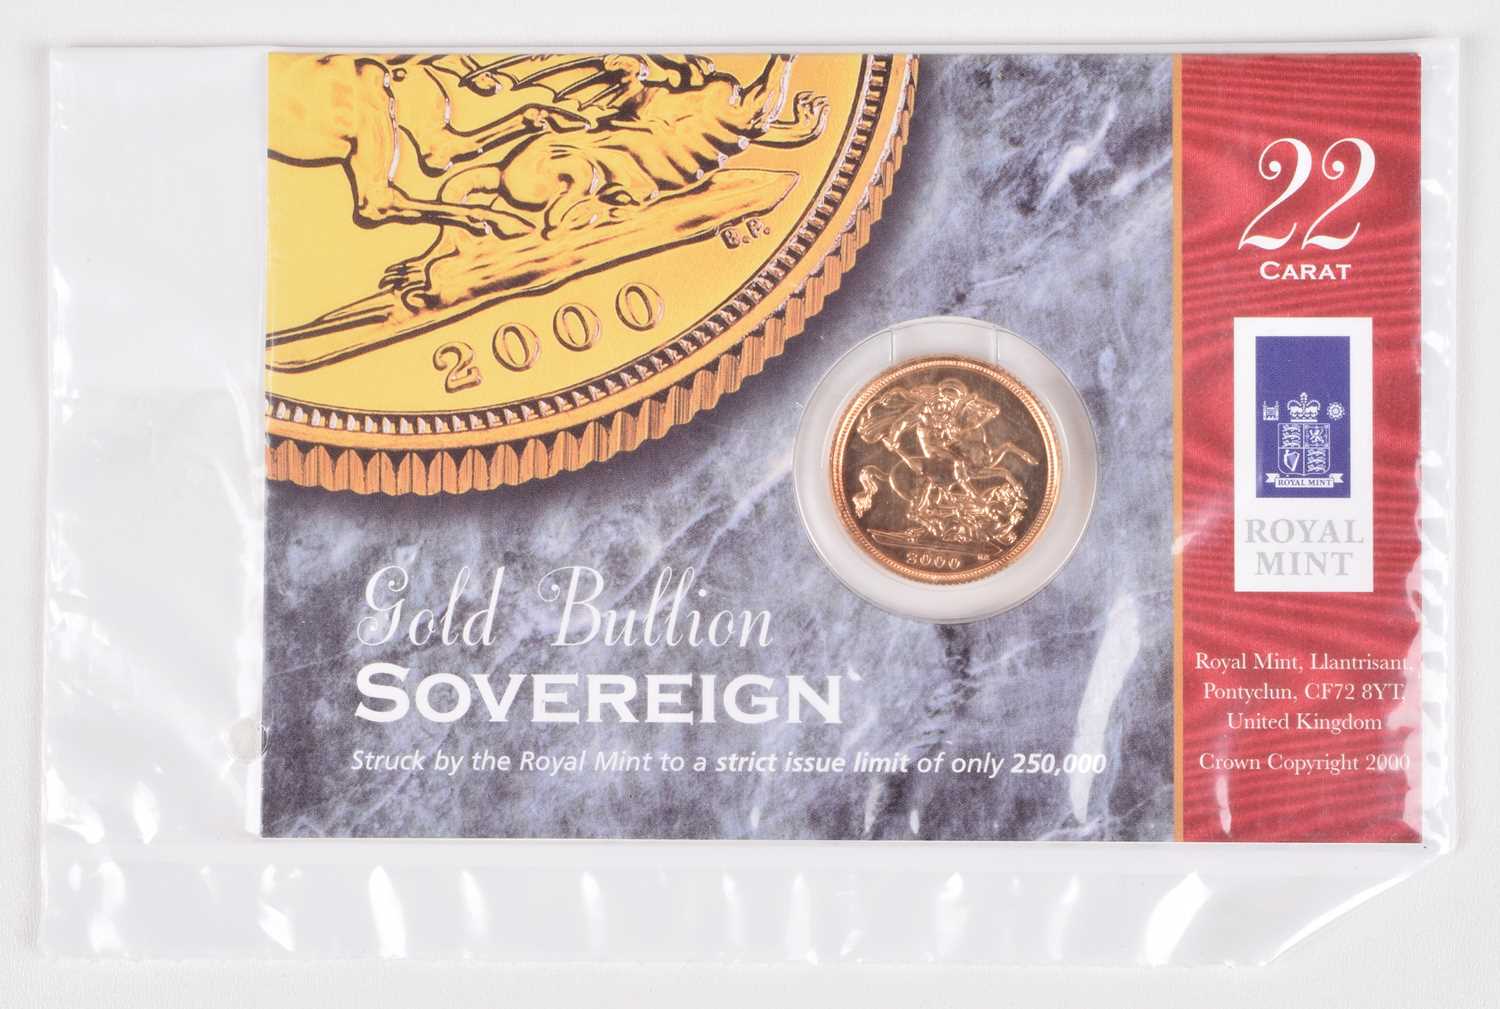 Lot 60 - Elizabeth II, Gold Bullion Sovereign, 2000, Royal Mint.